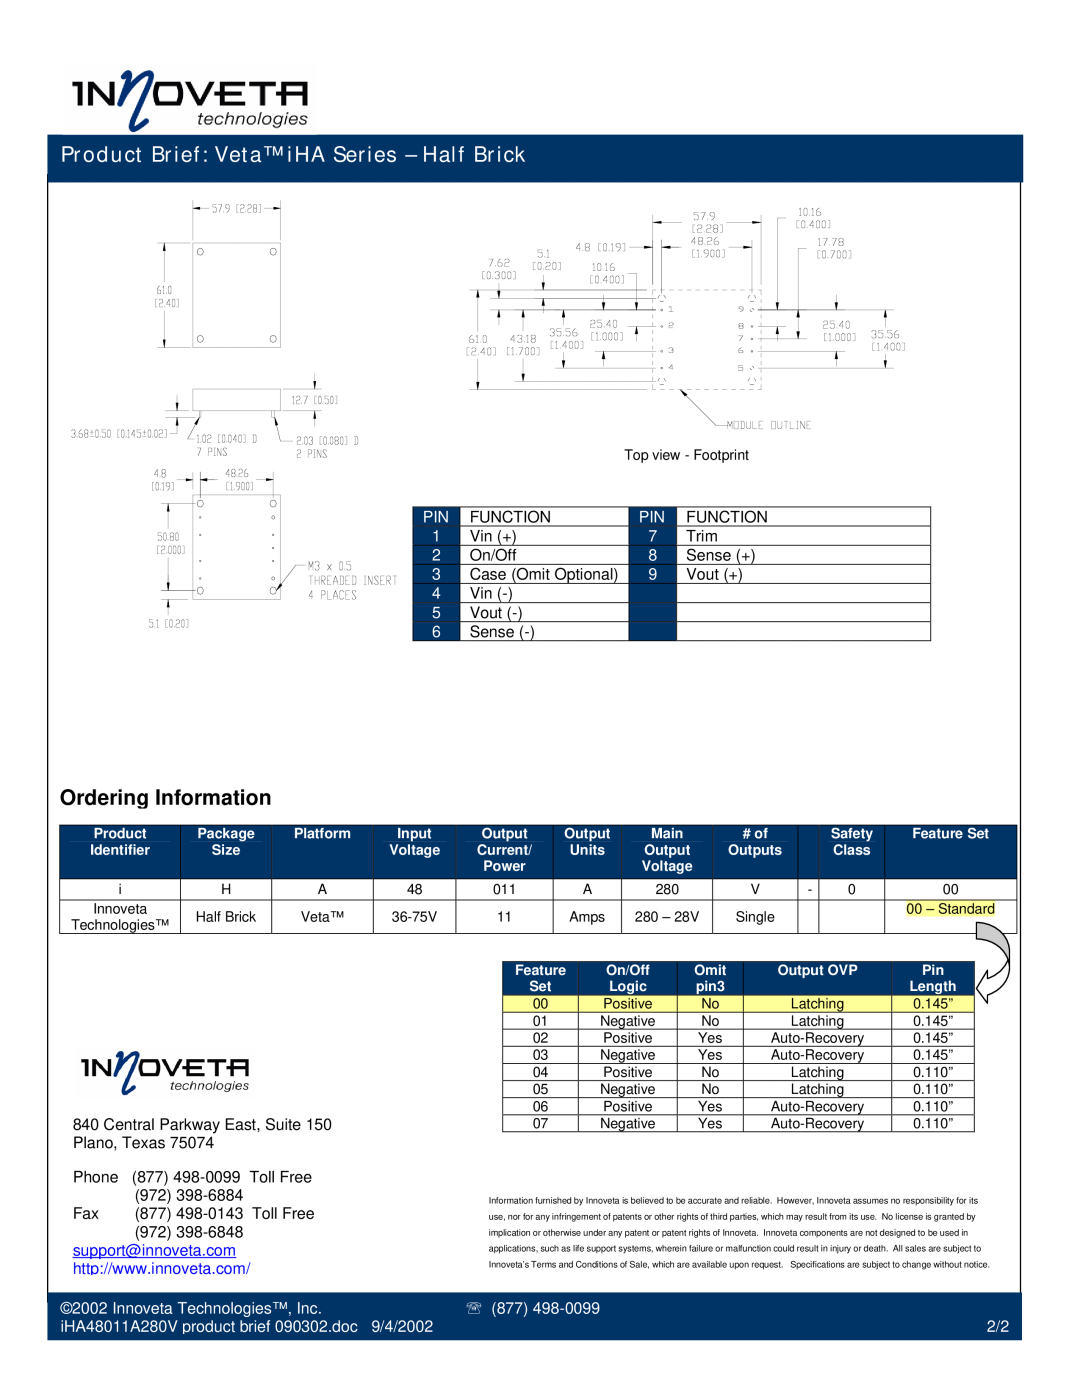 TDK manual Ordering Information, Product Brief Veta iHA Series - Half Brick, support@innoveta.com, 877 2/2 